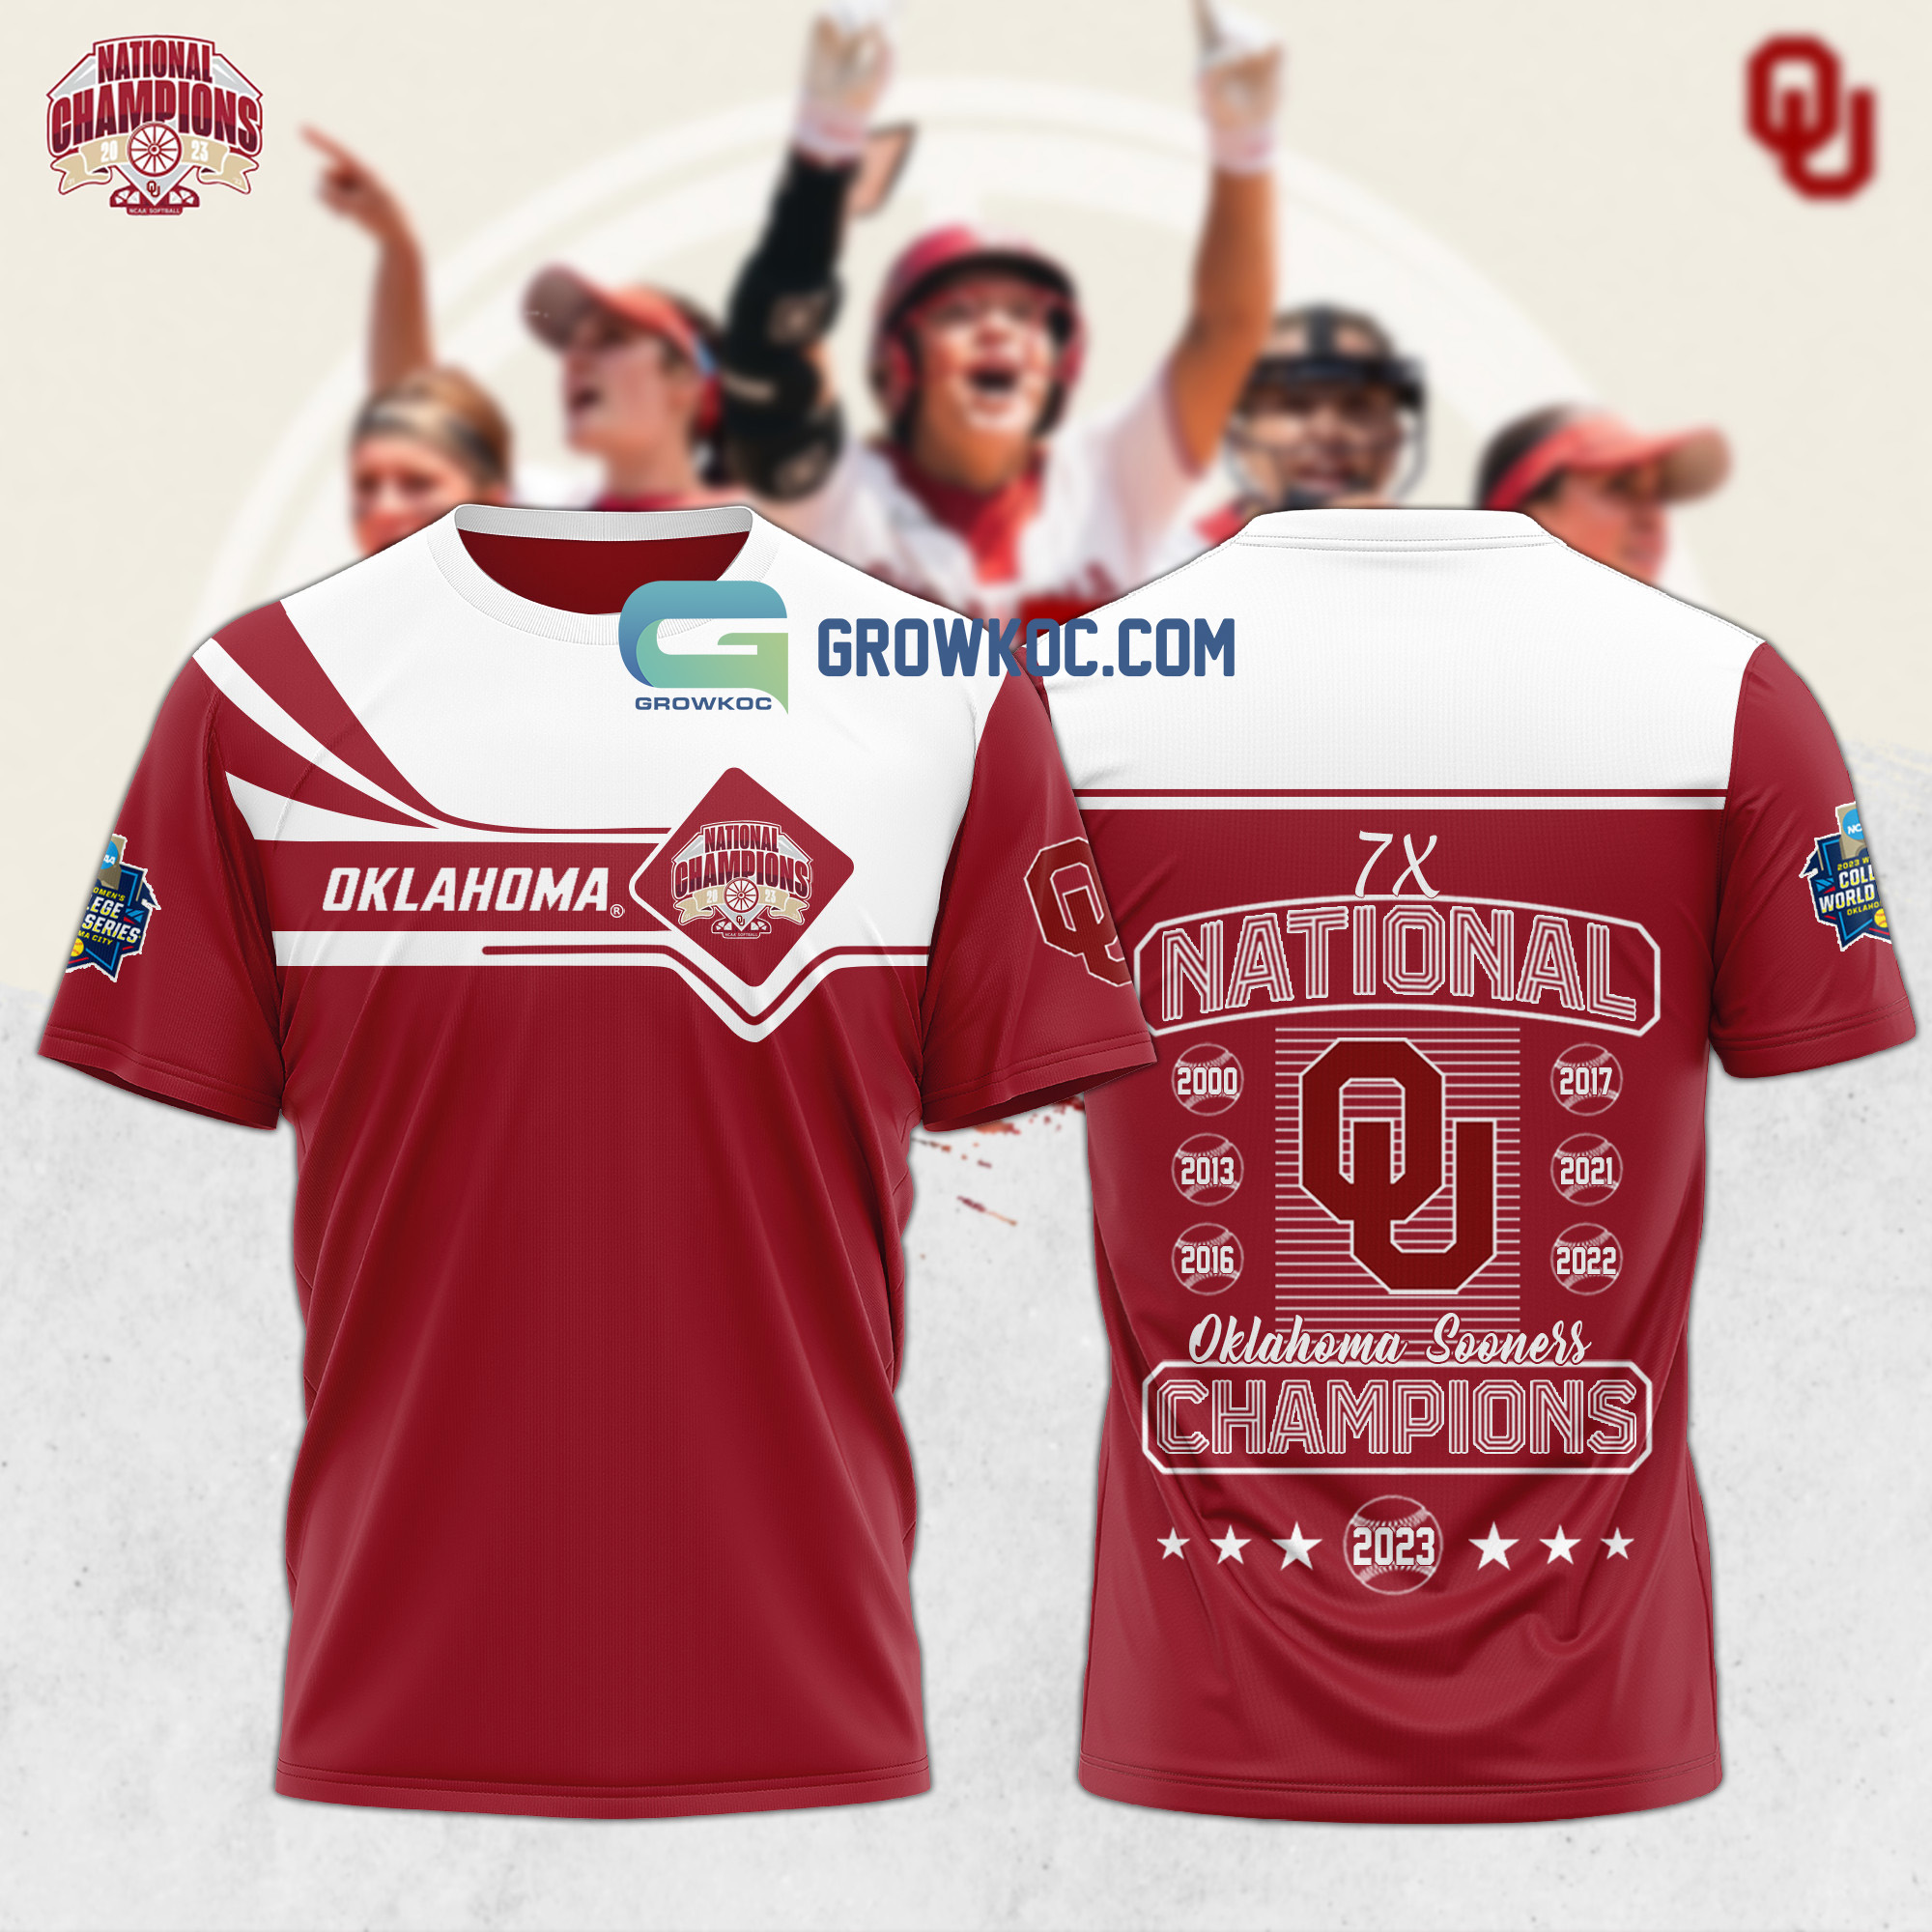 Oklahoma Sooners 7x National Champions Hoodie T Shirt